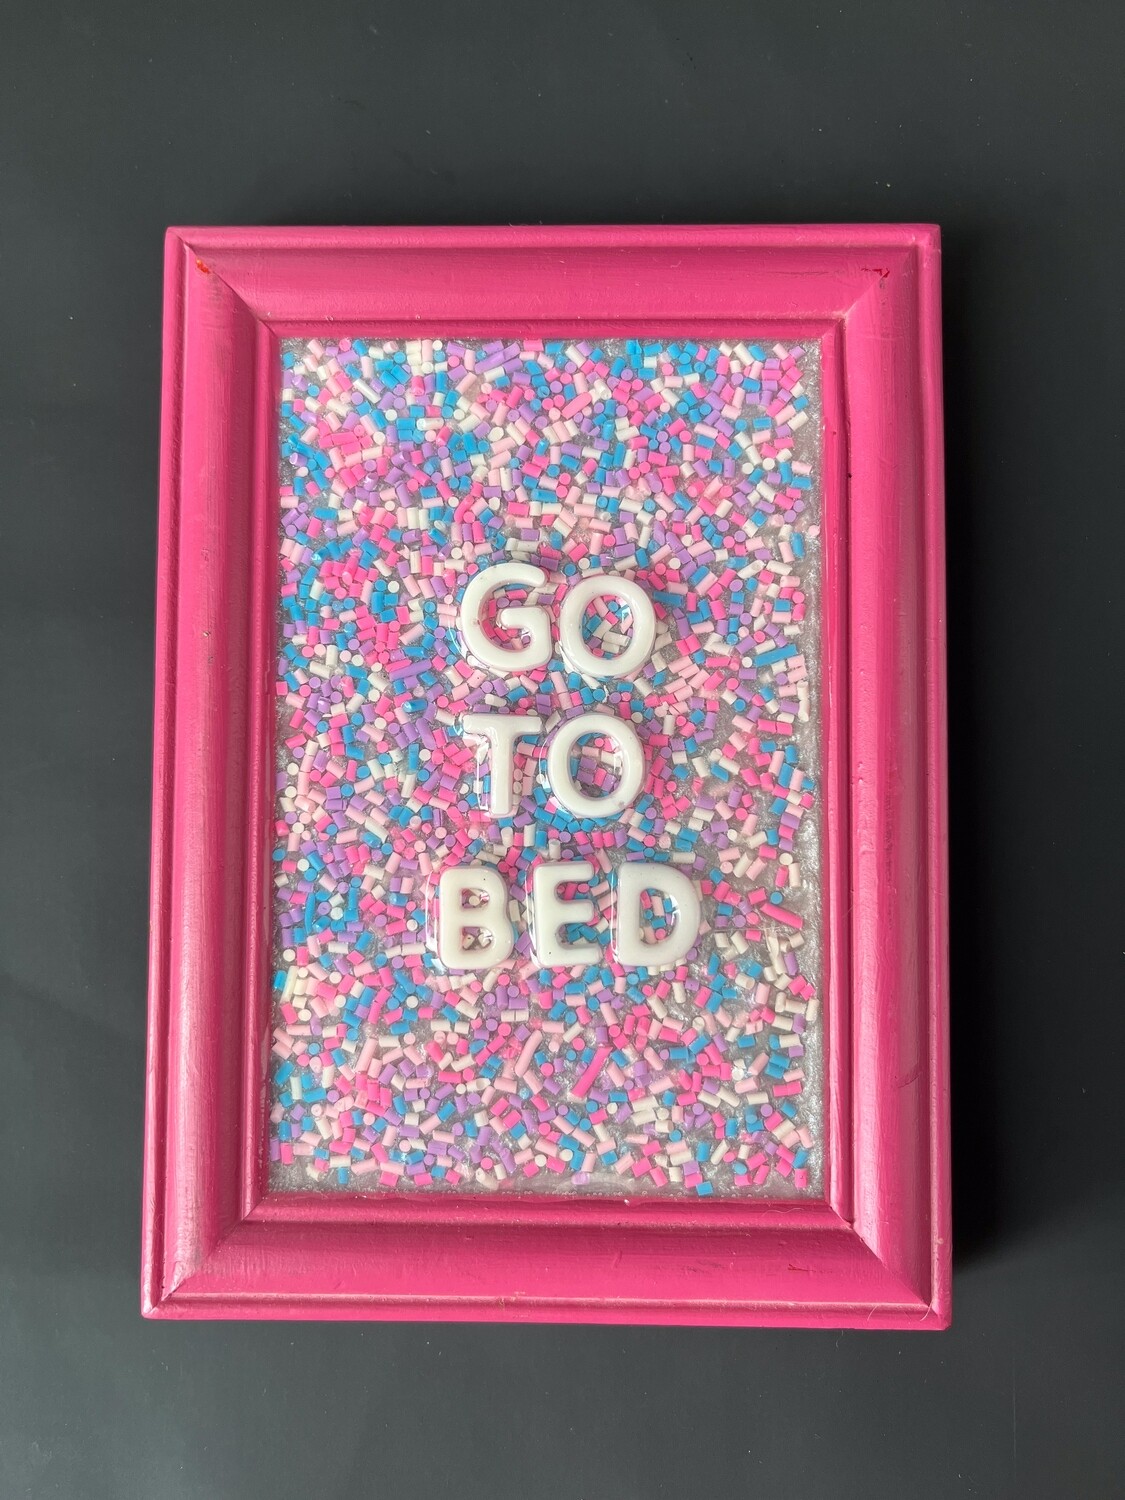 Framed Resin Artwork: Go to Bed